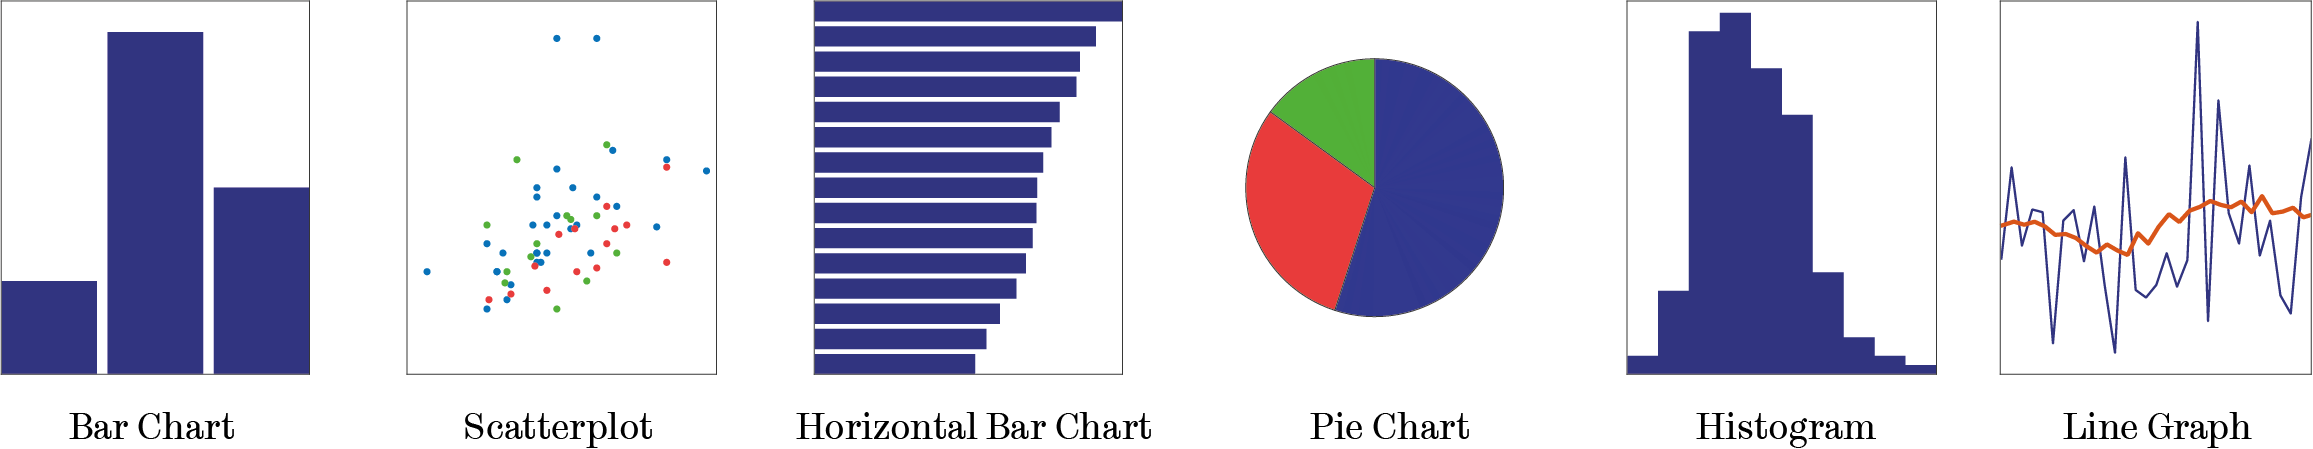 Six charts: bar charts, scatterplots, horizontal bar charts, pie charts, histograms and line graphs